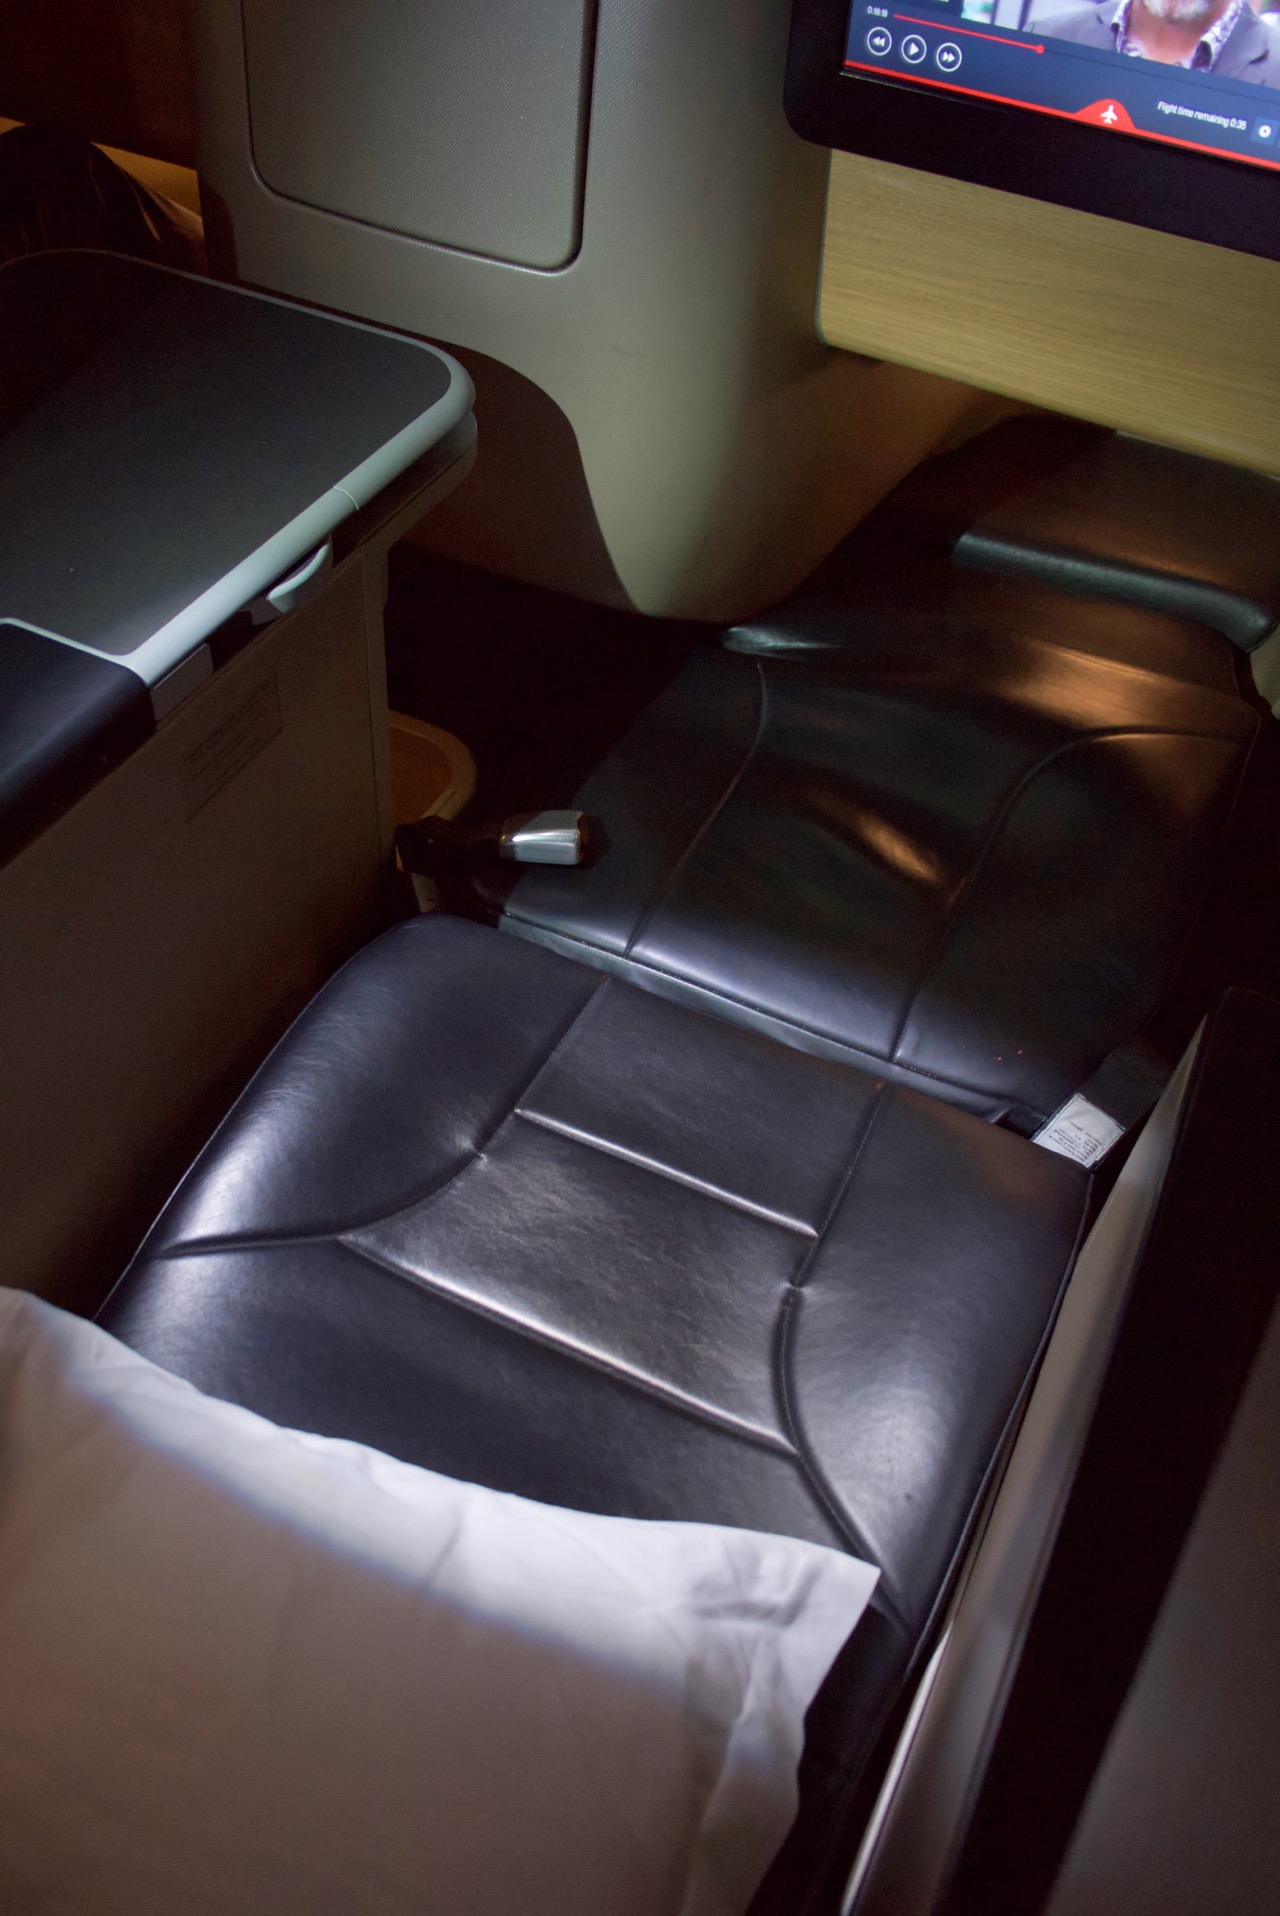 qantas-a330-domestic-business-class-seat-2